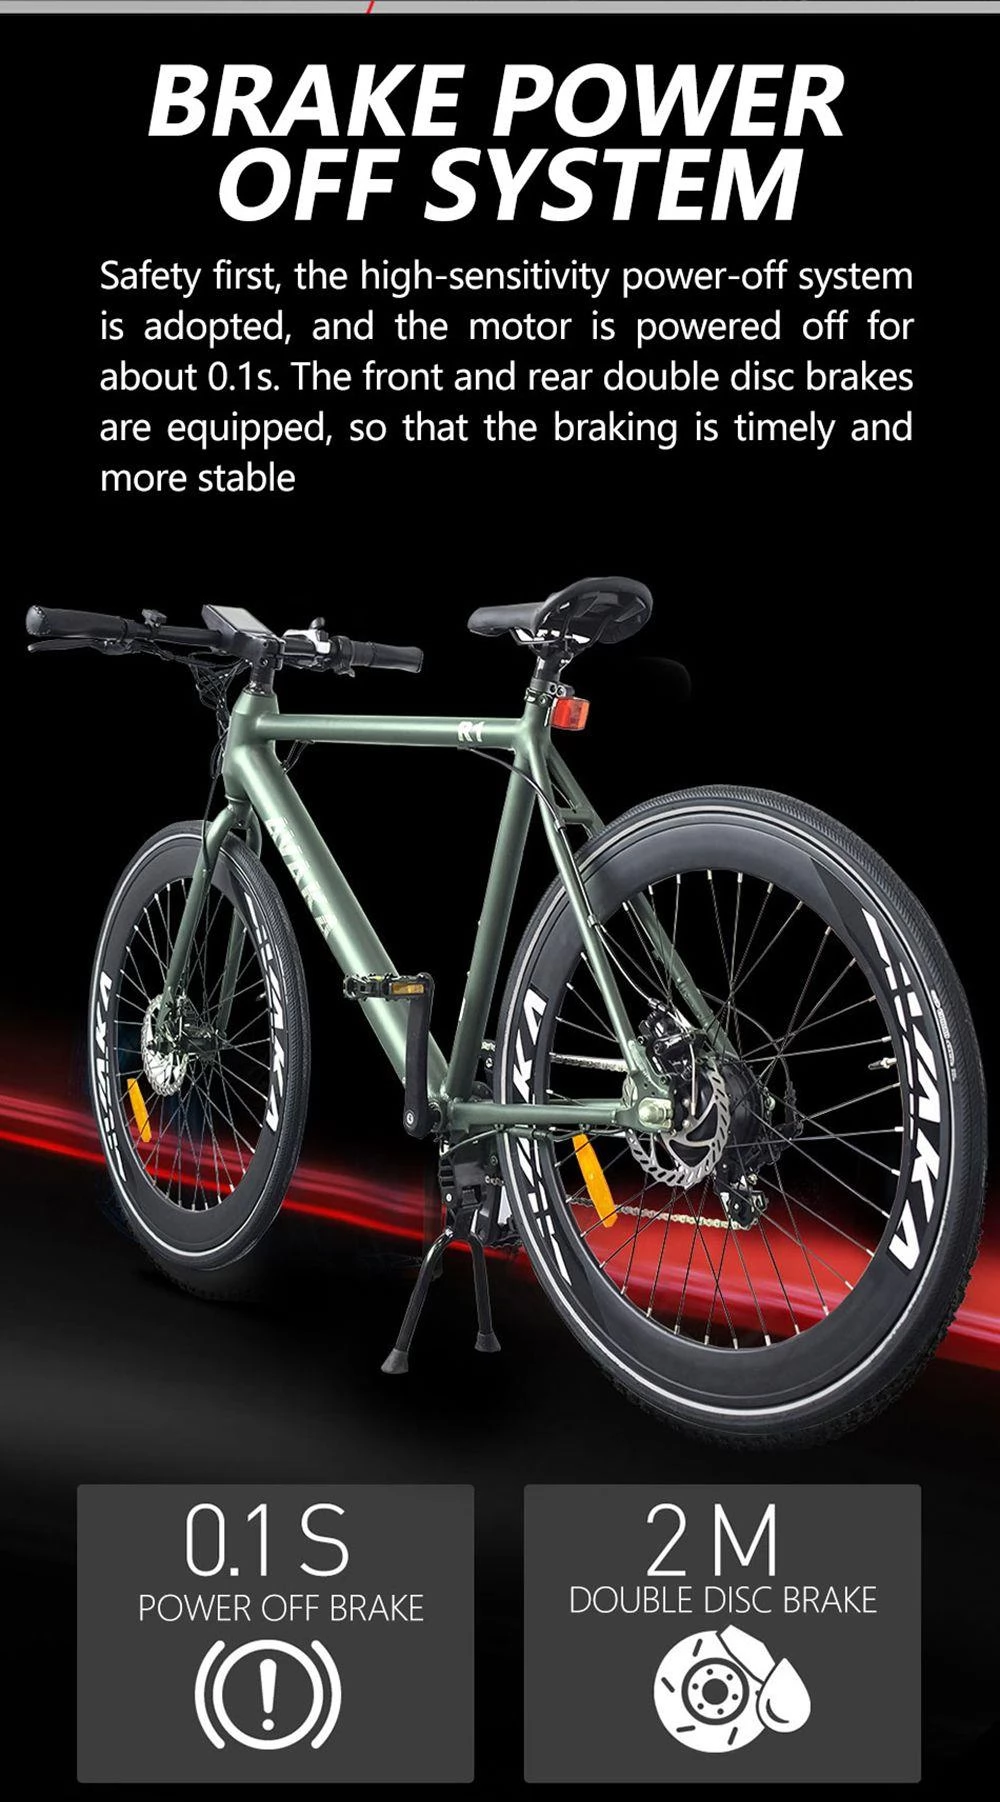 AVAKA R1 700C*32C Inches Tire City elektrische fiets - 250W borstelloze motor & 36V 9Ah batterij